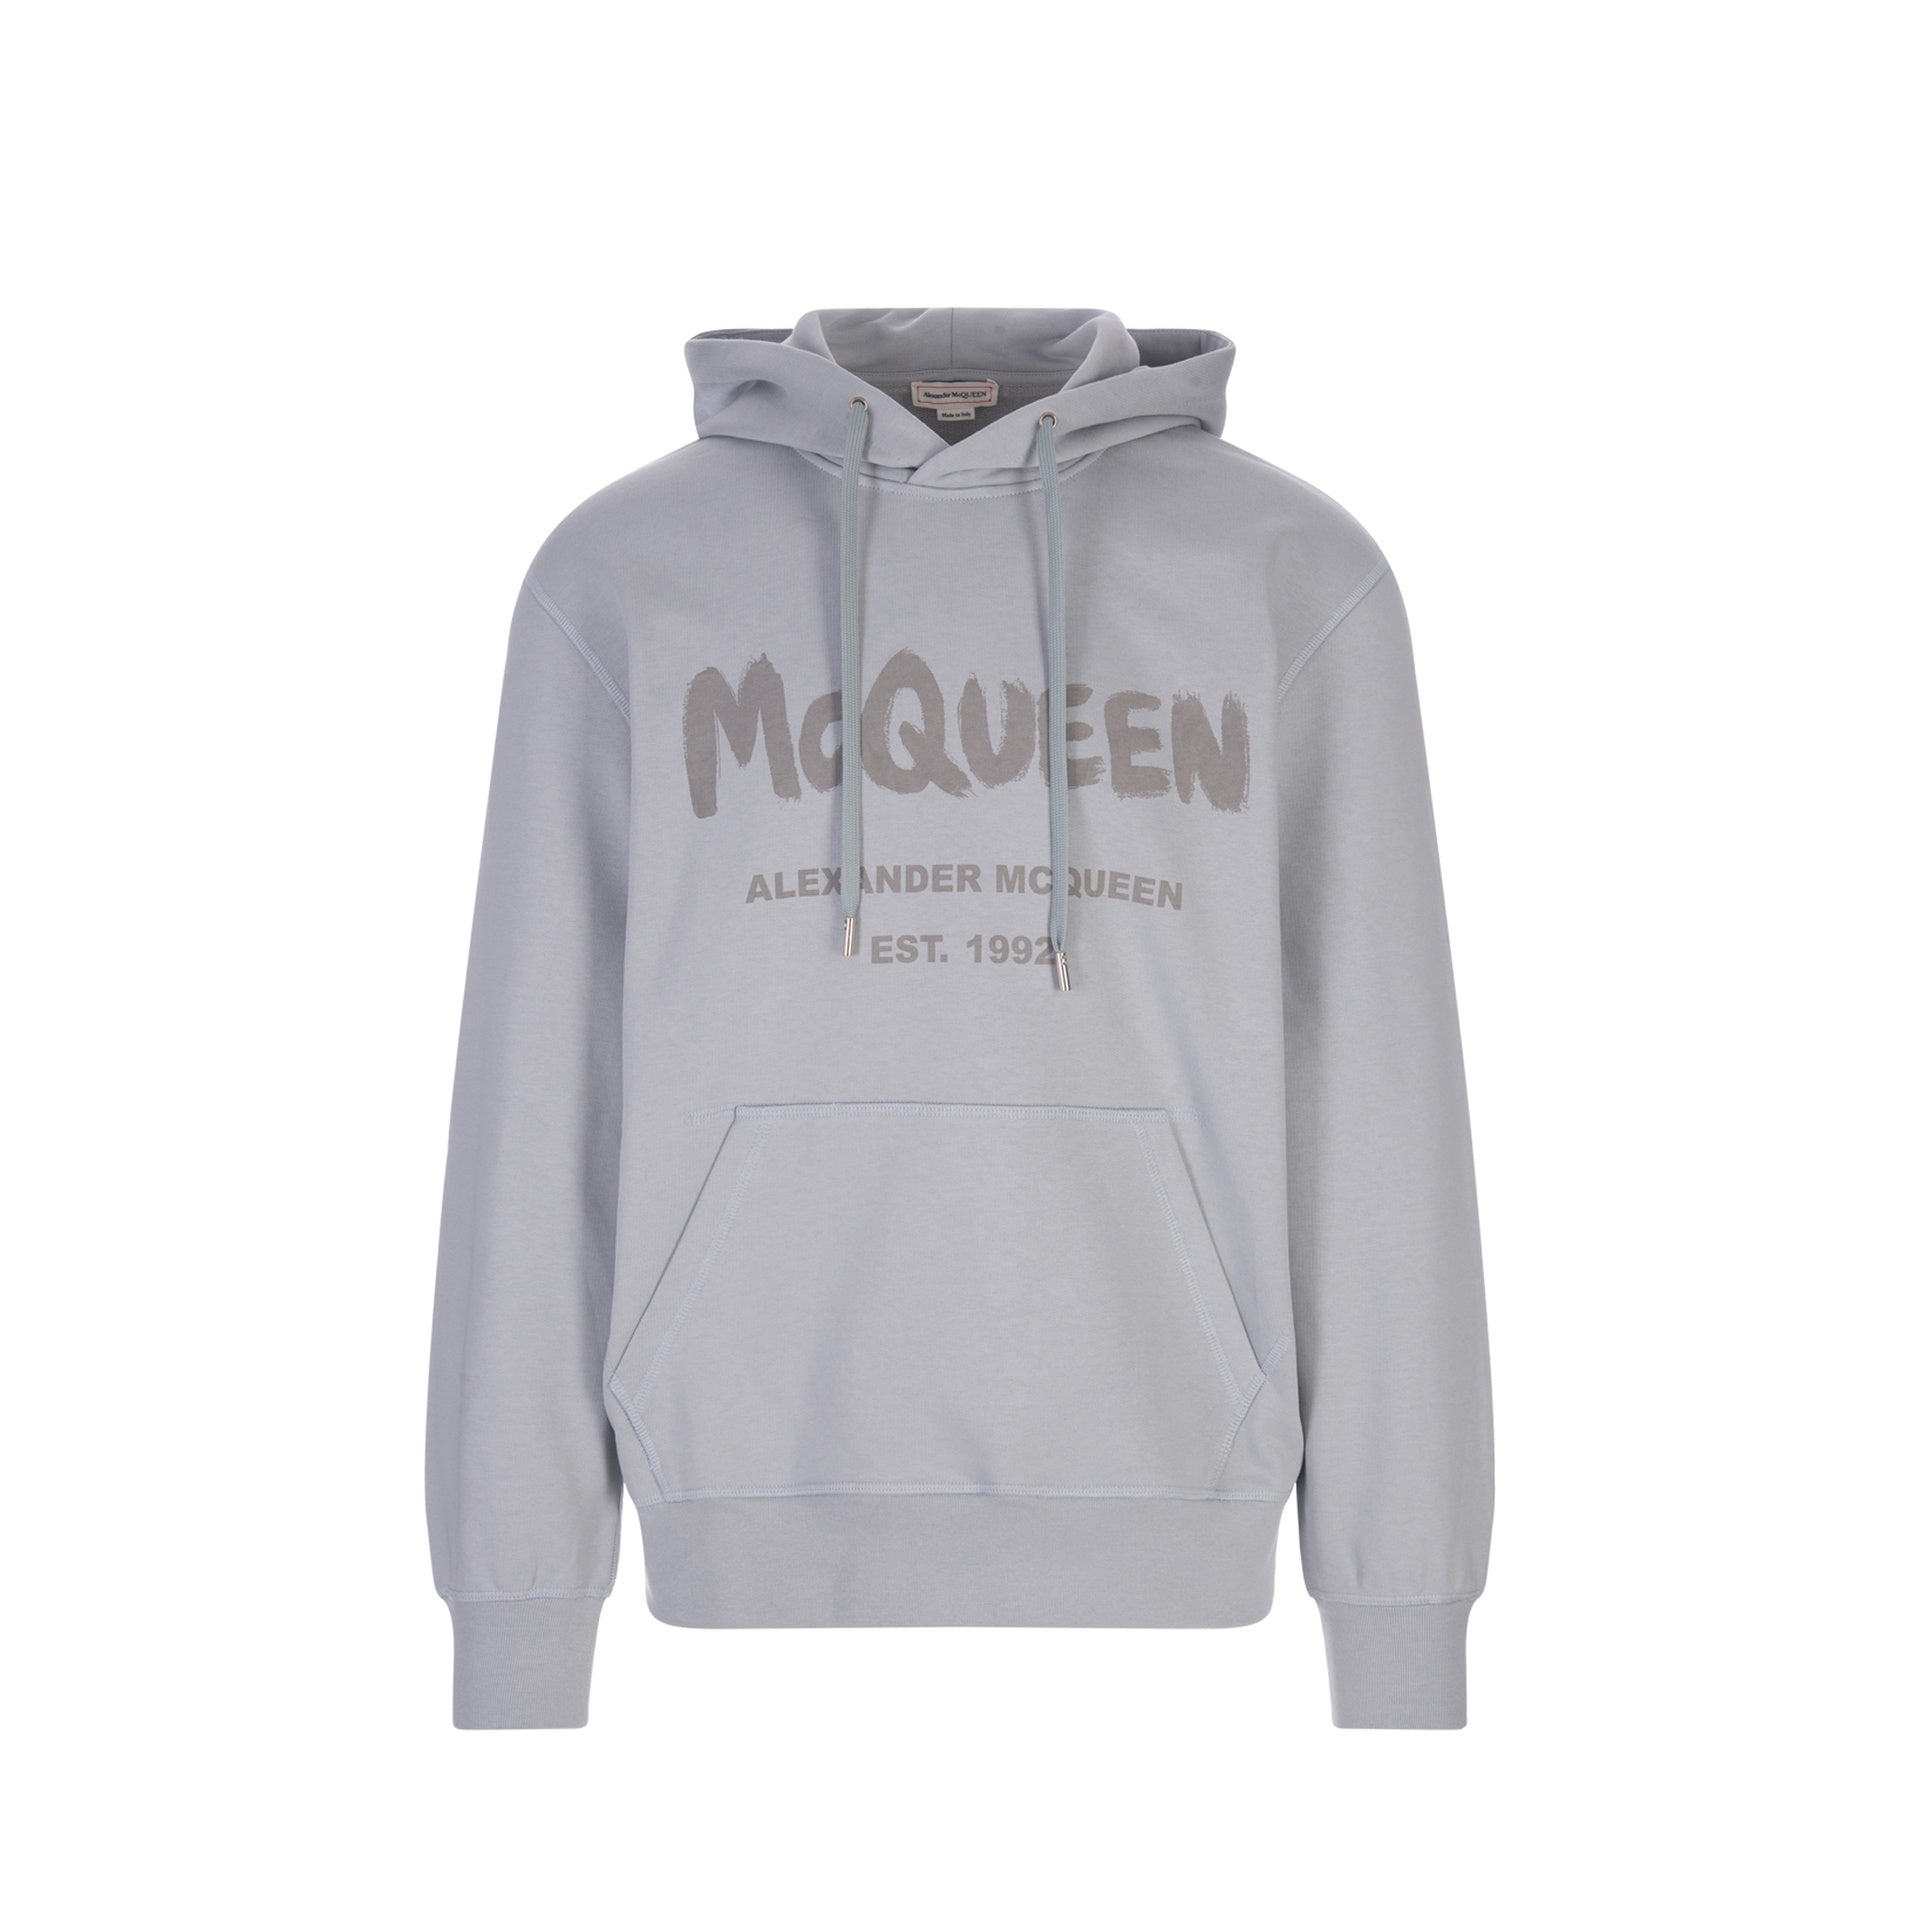 ALEXANDER-MCQUEEN-OUTLET-SALE-ALEXANDER-MCQUEEN-Hoodie-Sweatshirt-Shirts-GREY-L-ARCHIVE-COLLECTION.jpg